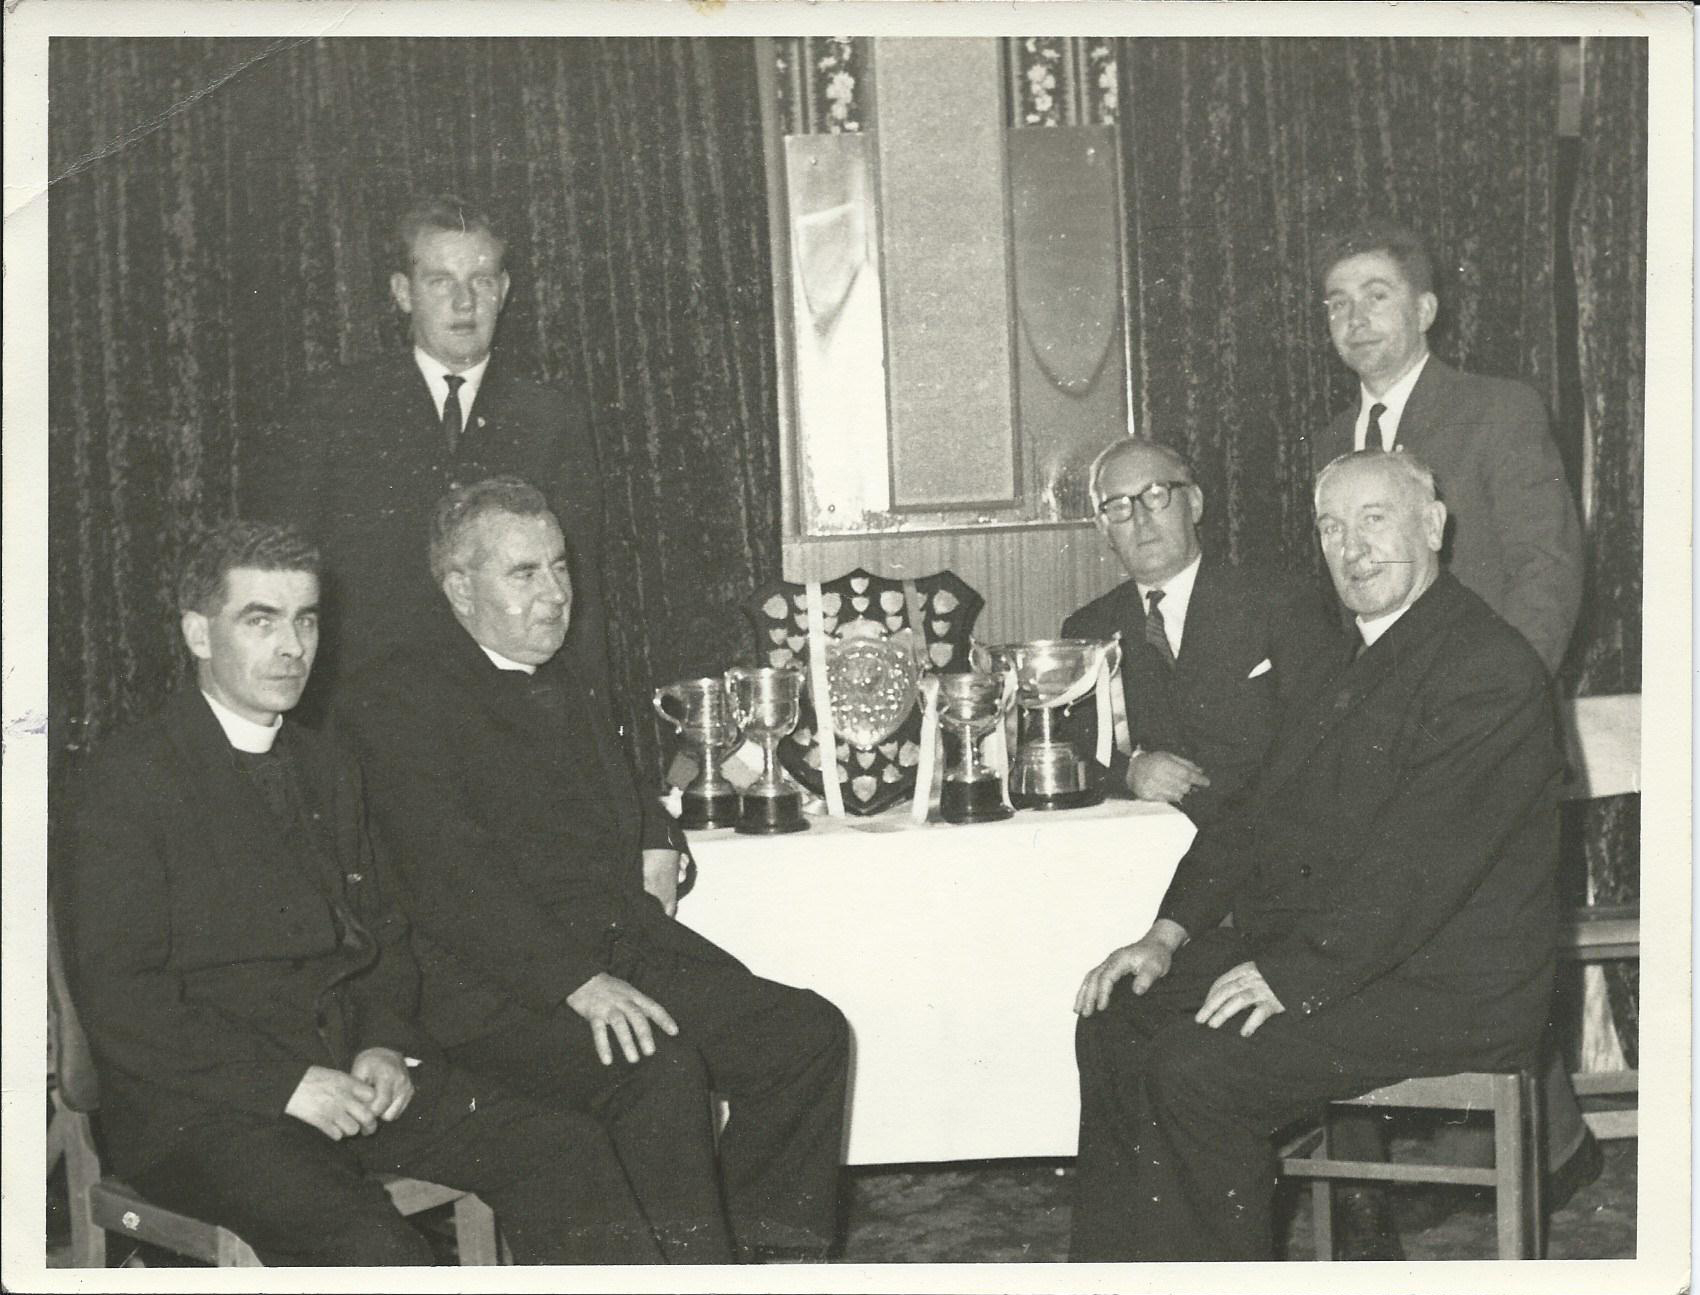 1964 annual dinner